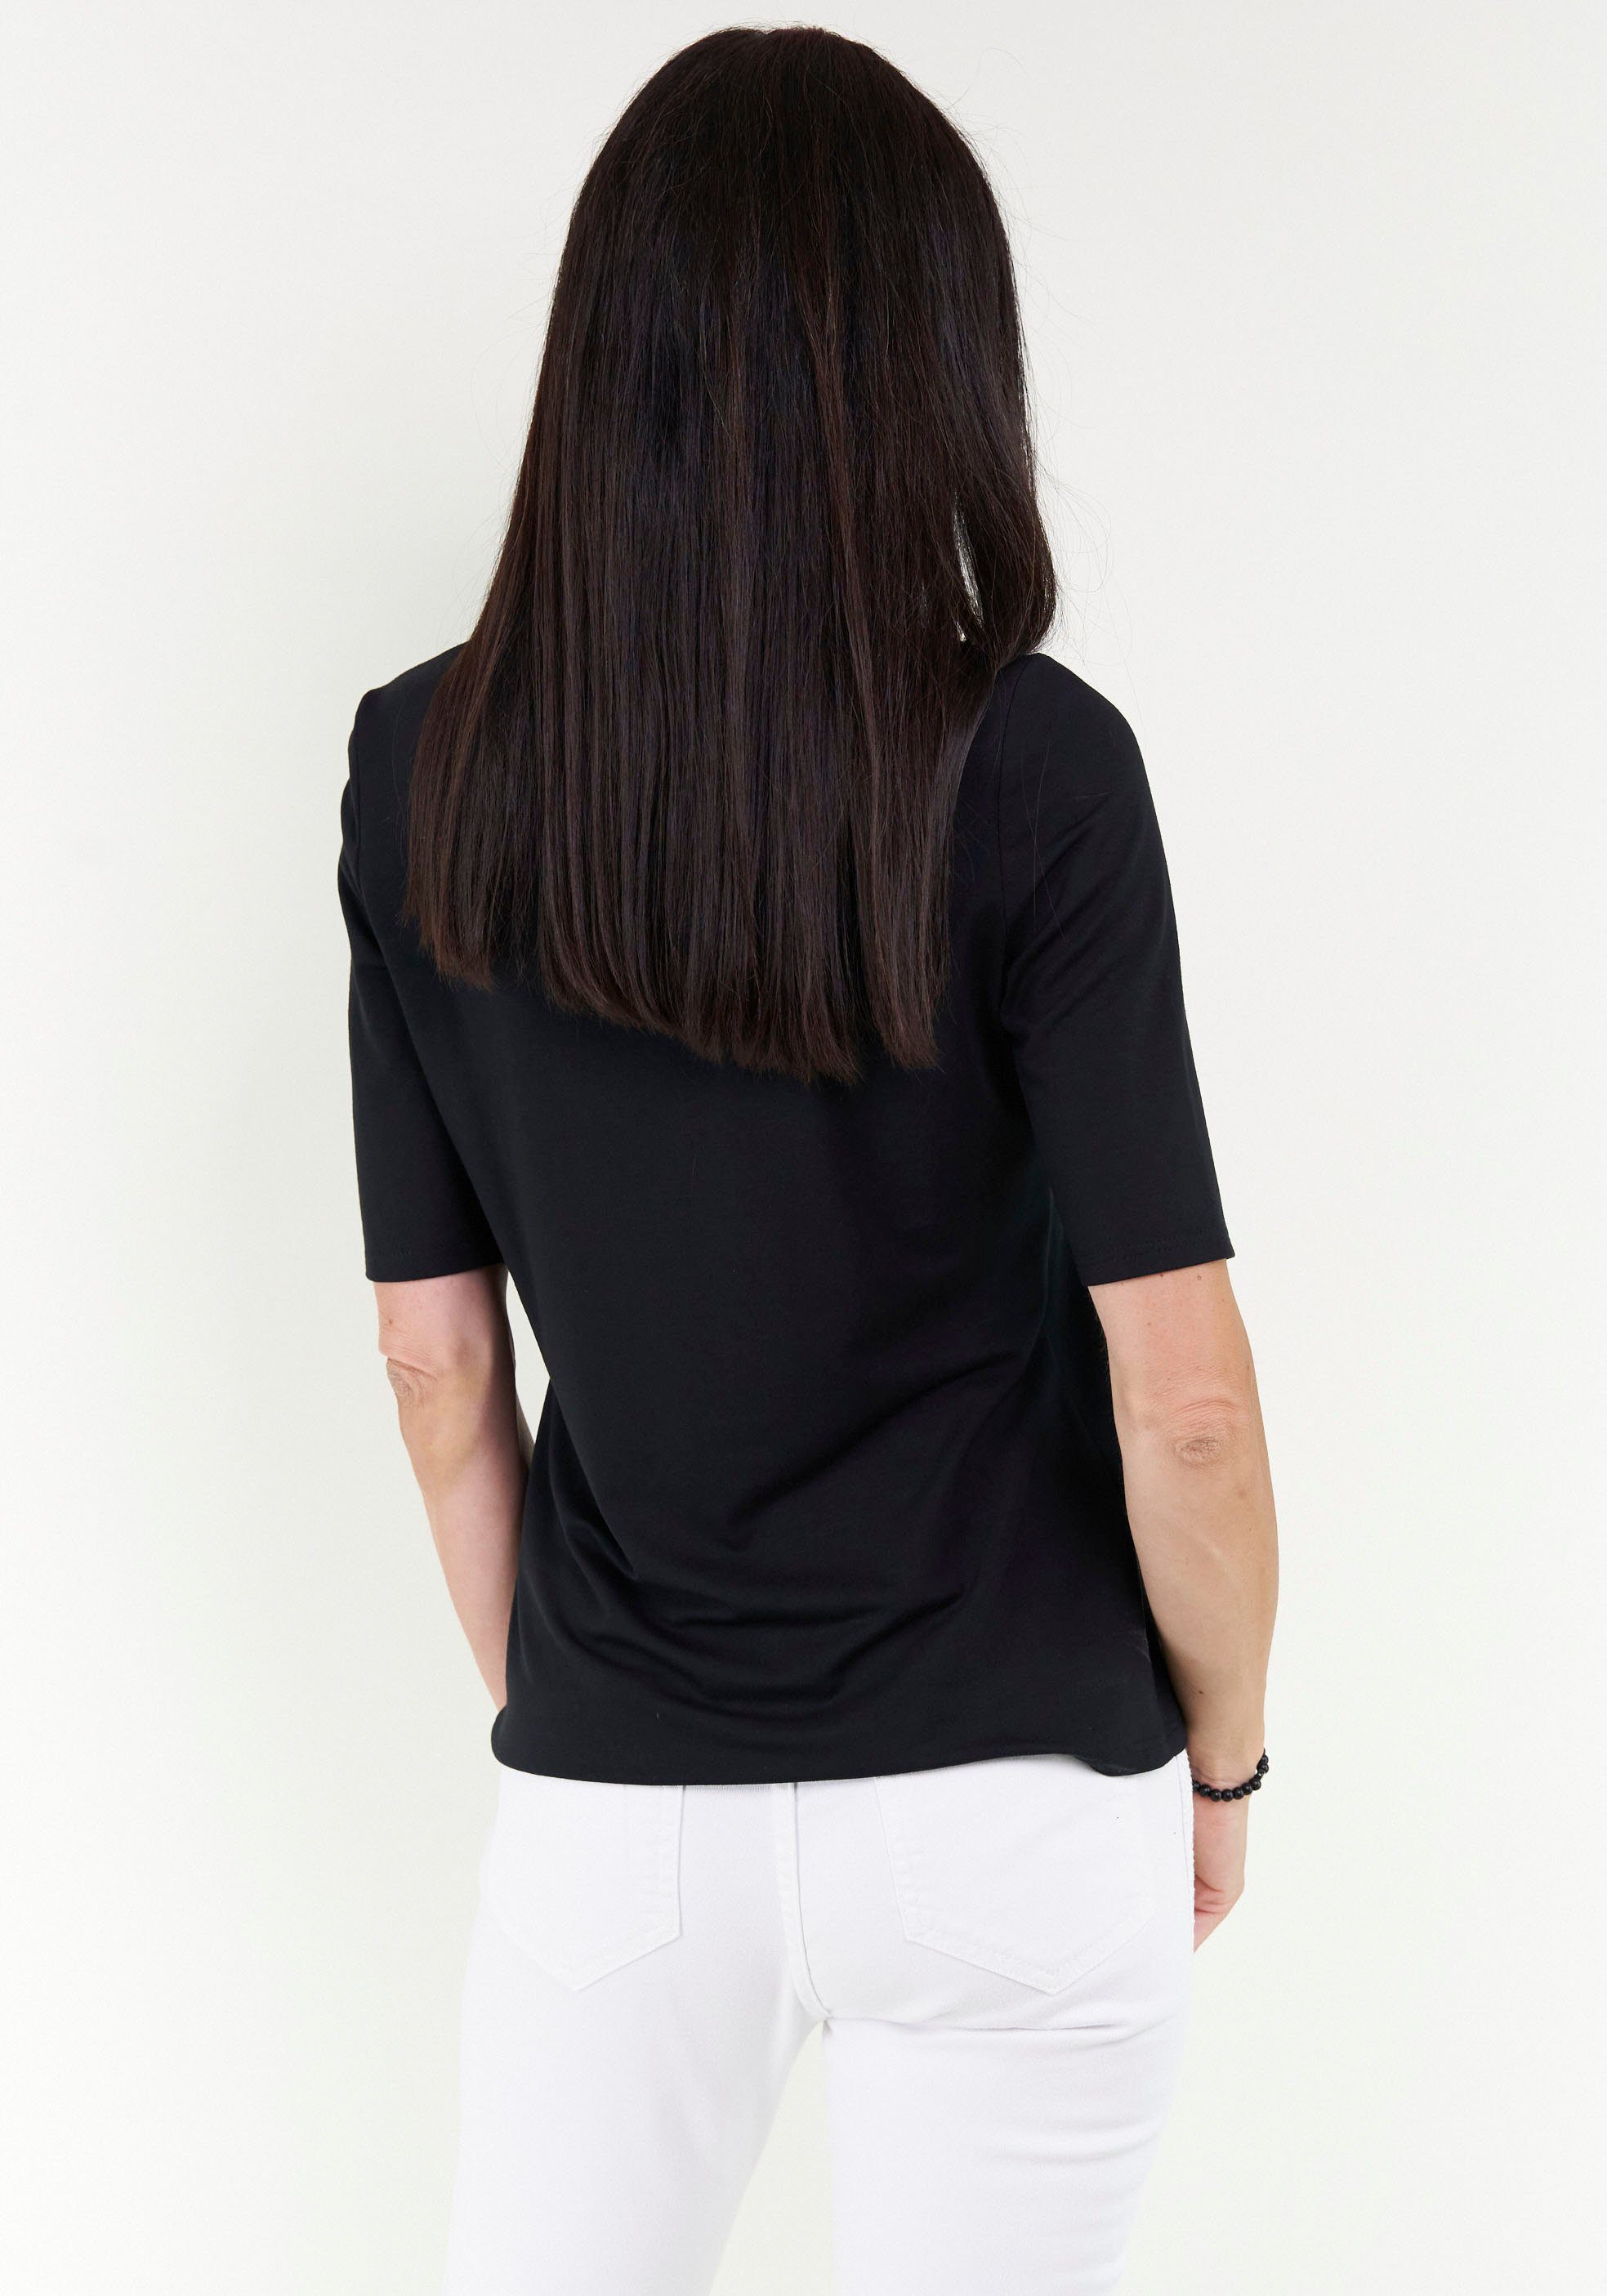 Moden V-Shirt softem IN MADE aus GERMANY Material, schwarz Halbarm Seidel mit